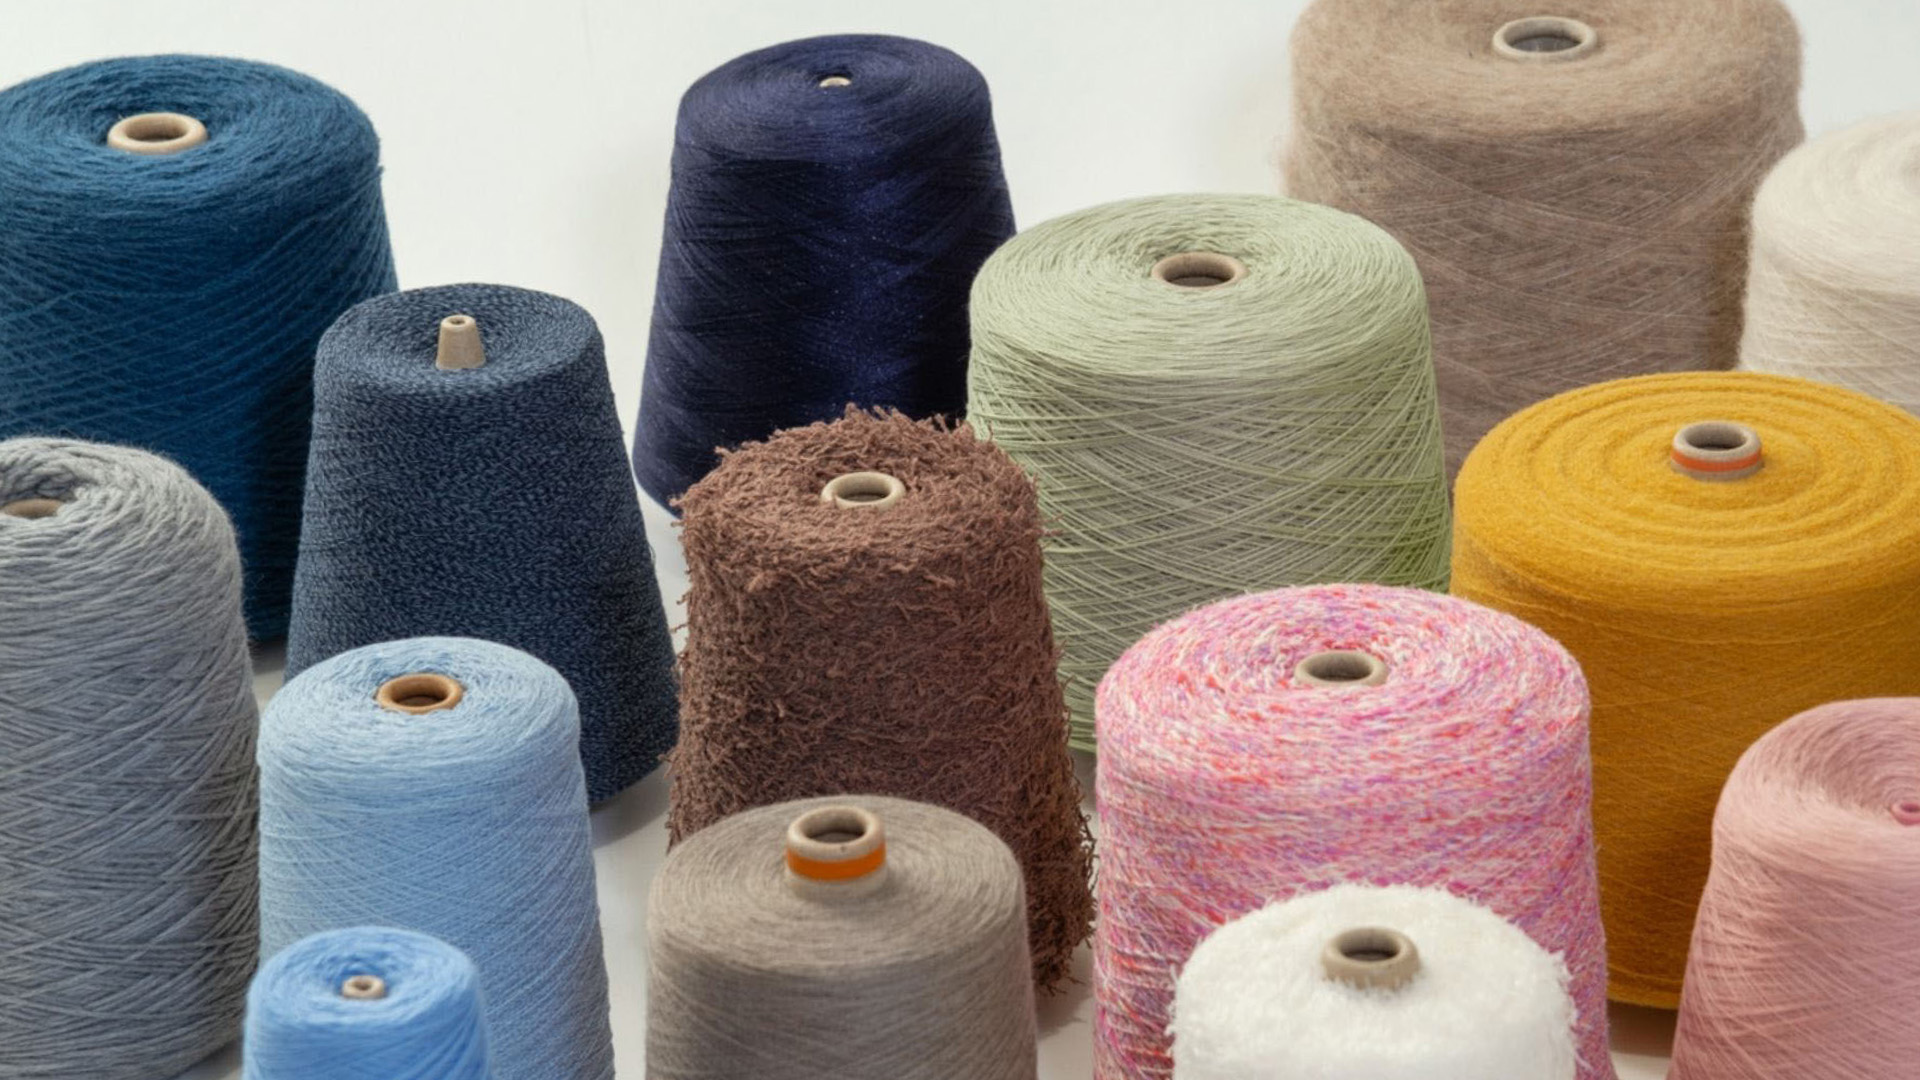 Yarn01, Dongguan Haihongsheng Textile Co., Ltd.